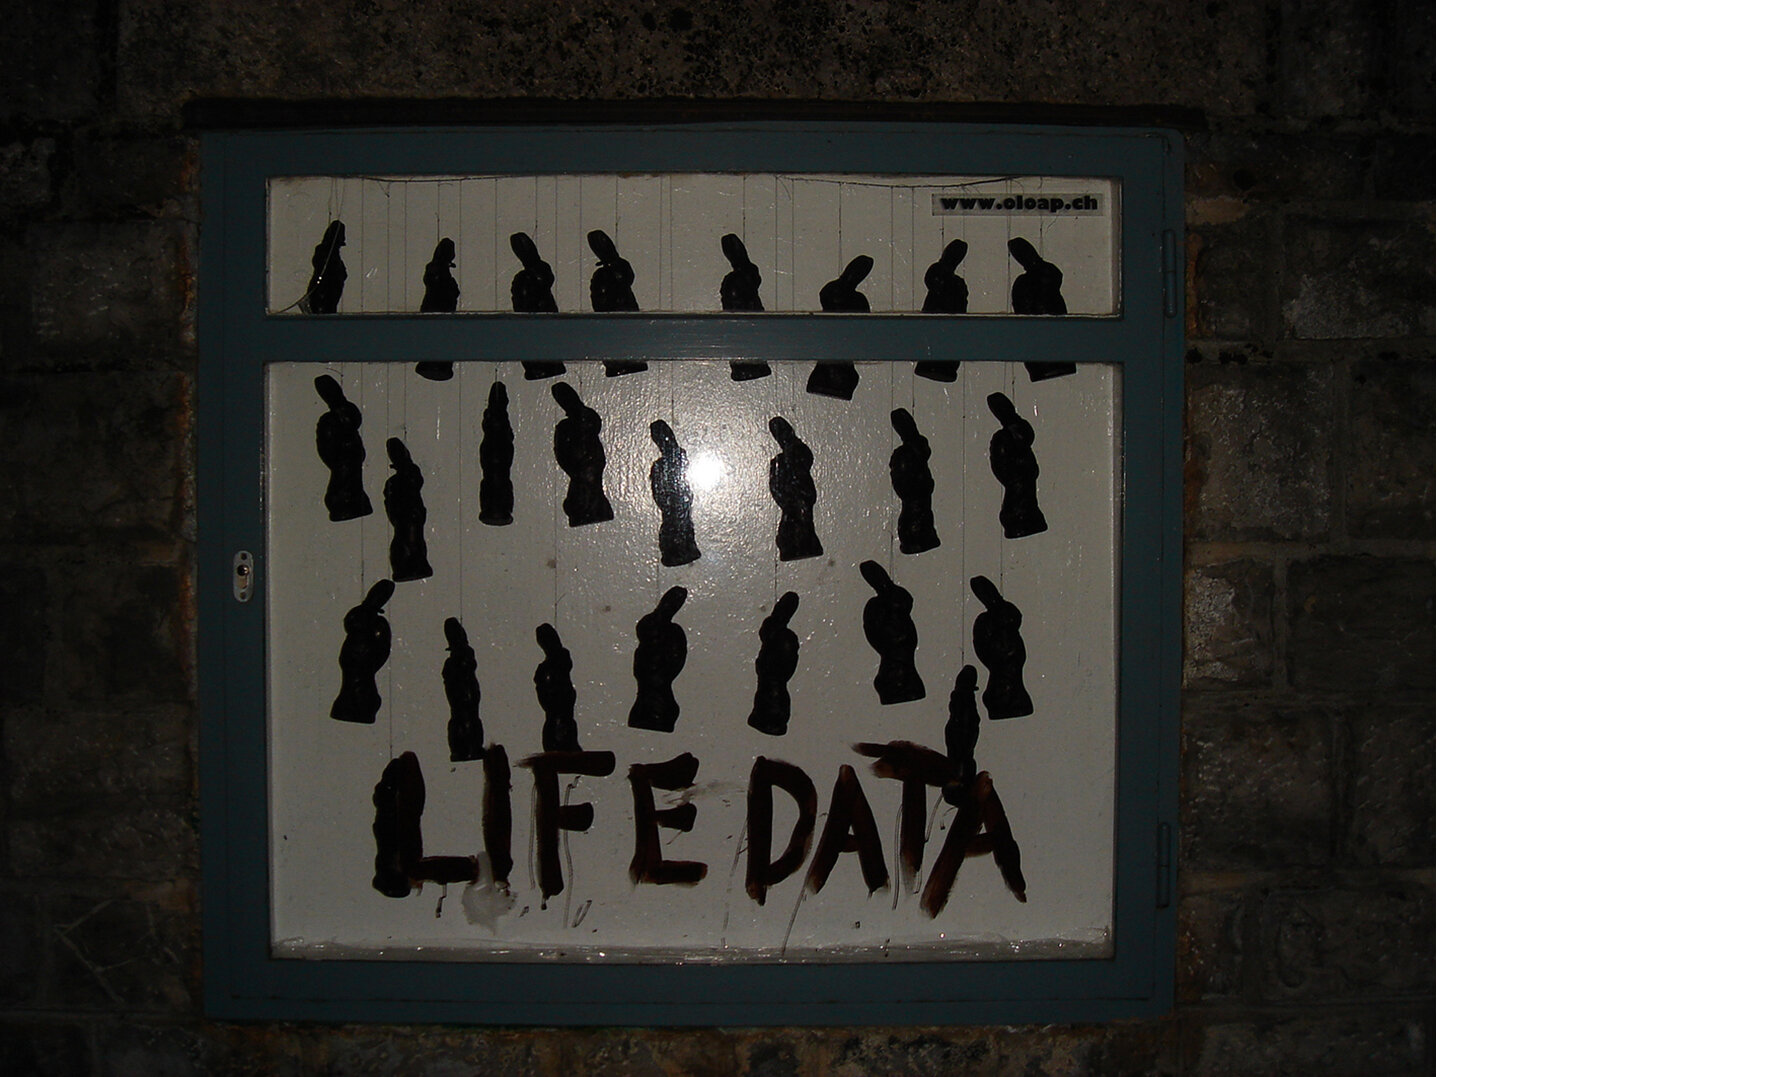   Life data (2007) Loïc Martin   Chocolate, tie and nylon thread. Variable size installation (48,8 x 49,6 x 11,6 inches / 124 x 126 x 29,5 cm) 